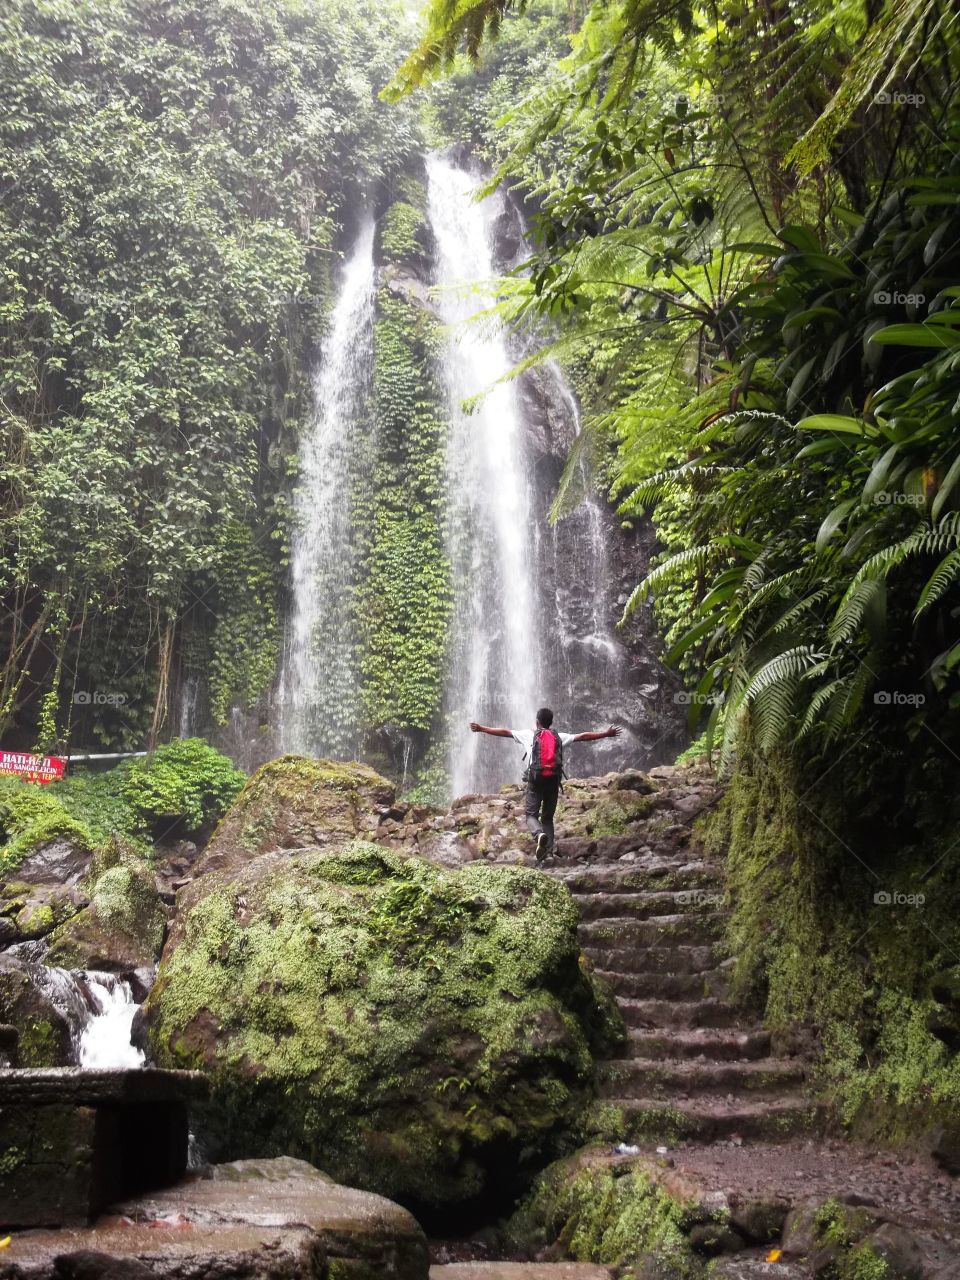 jumog beautiful waterfall located in karanganyar, central java, indonesia